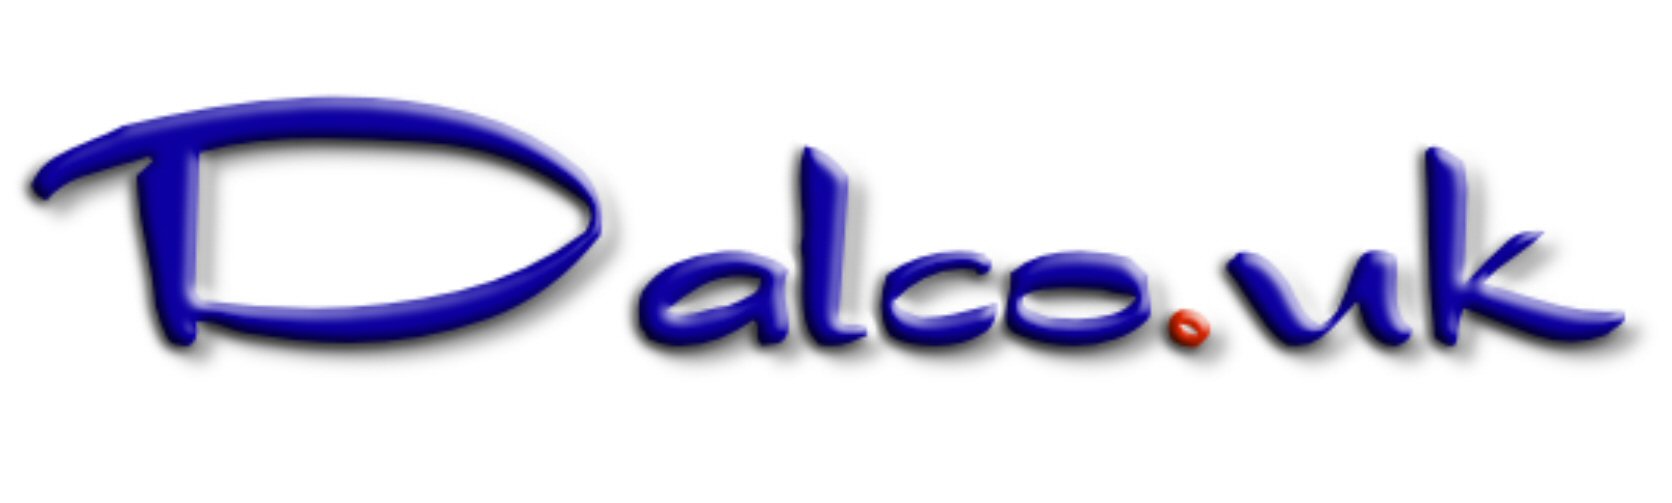 Dalco_logo